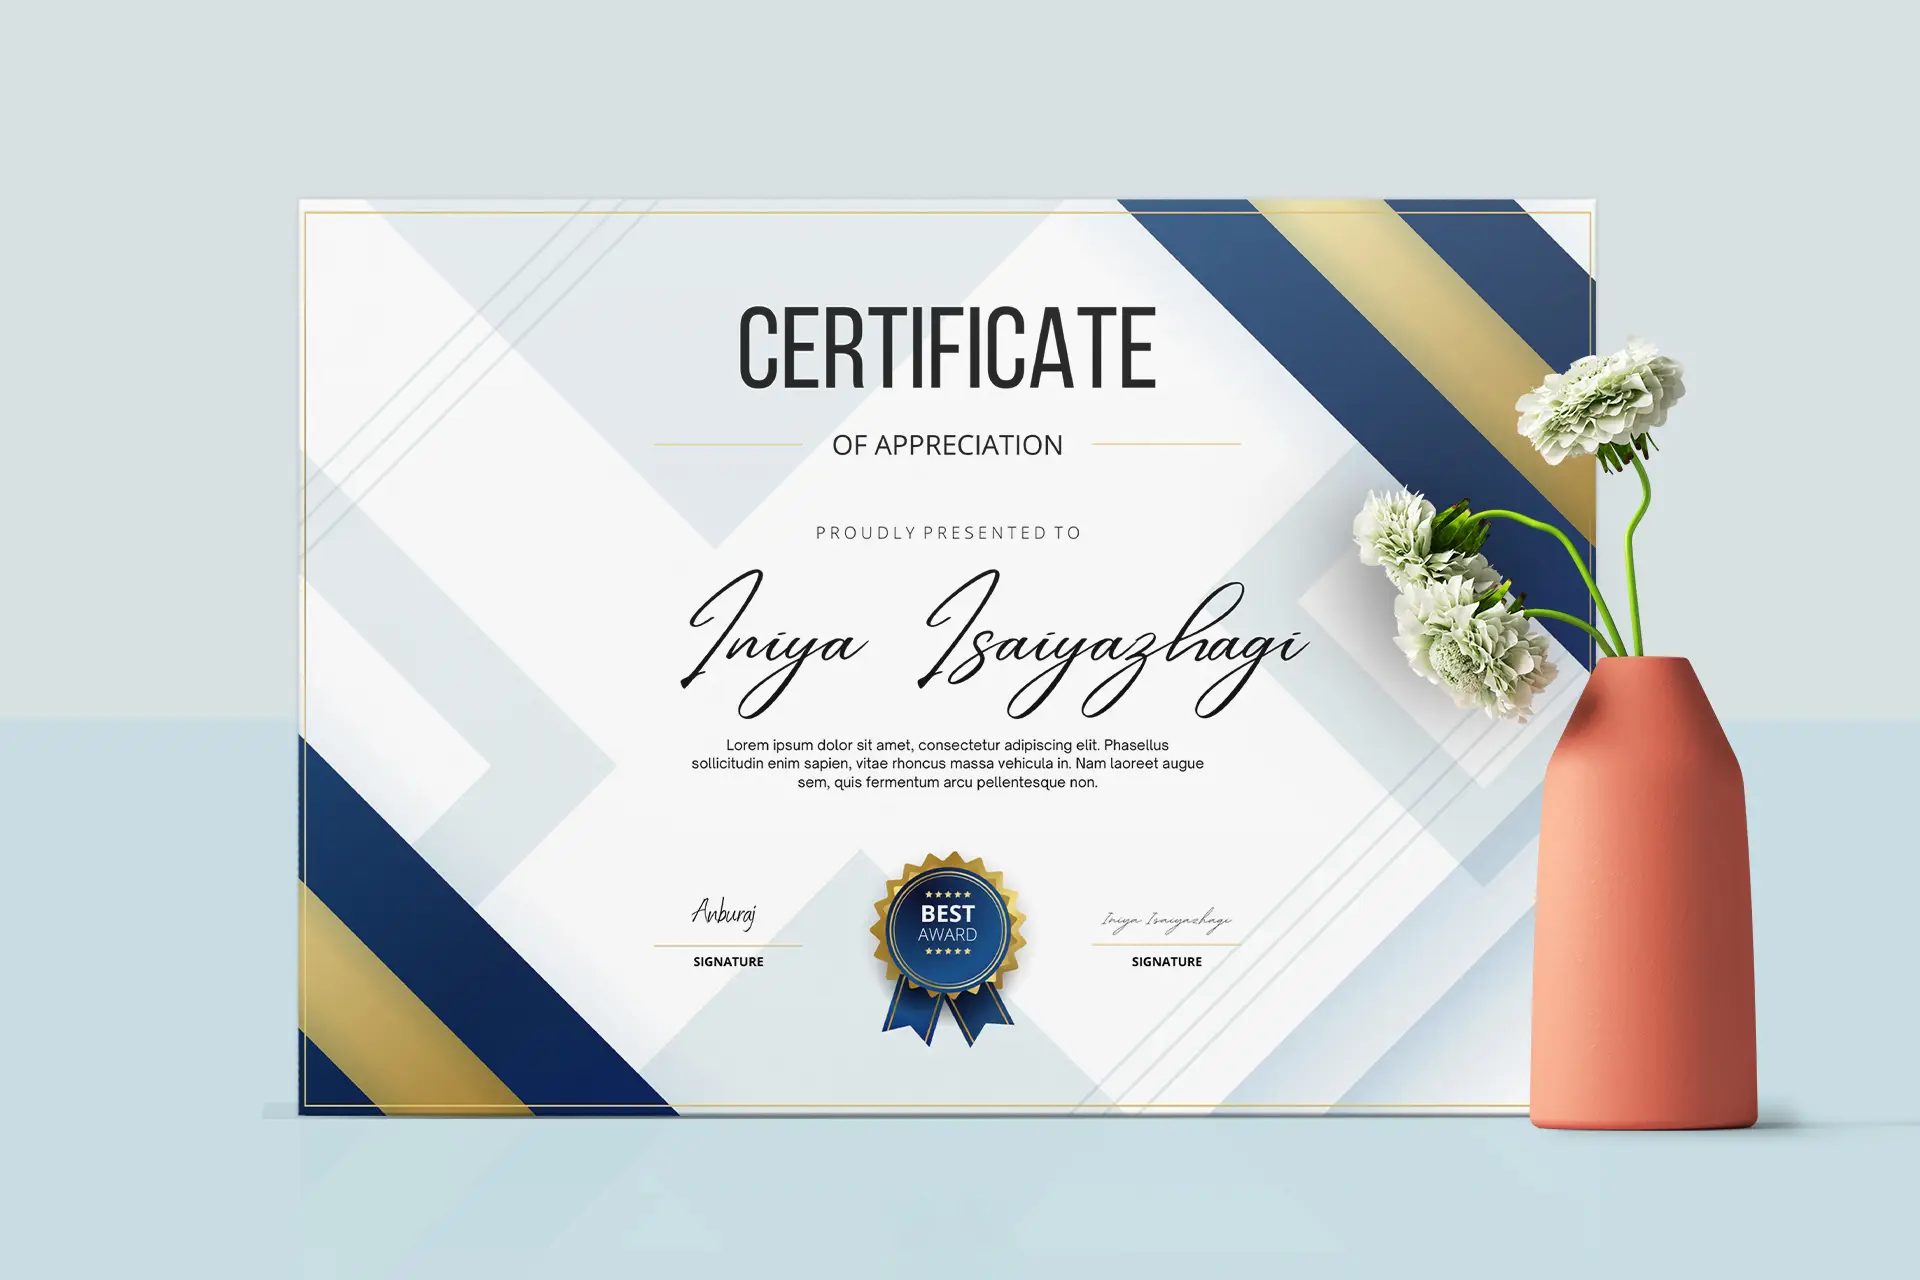 Standard Certificates